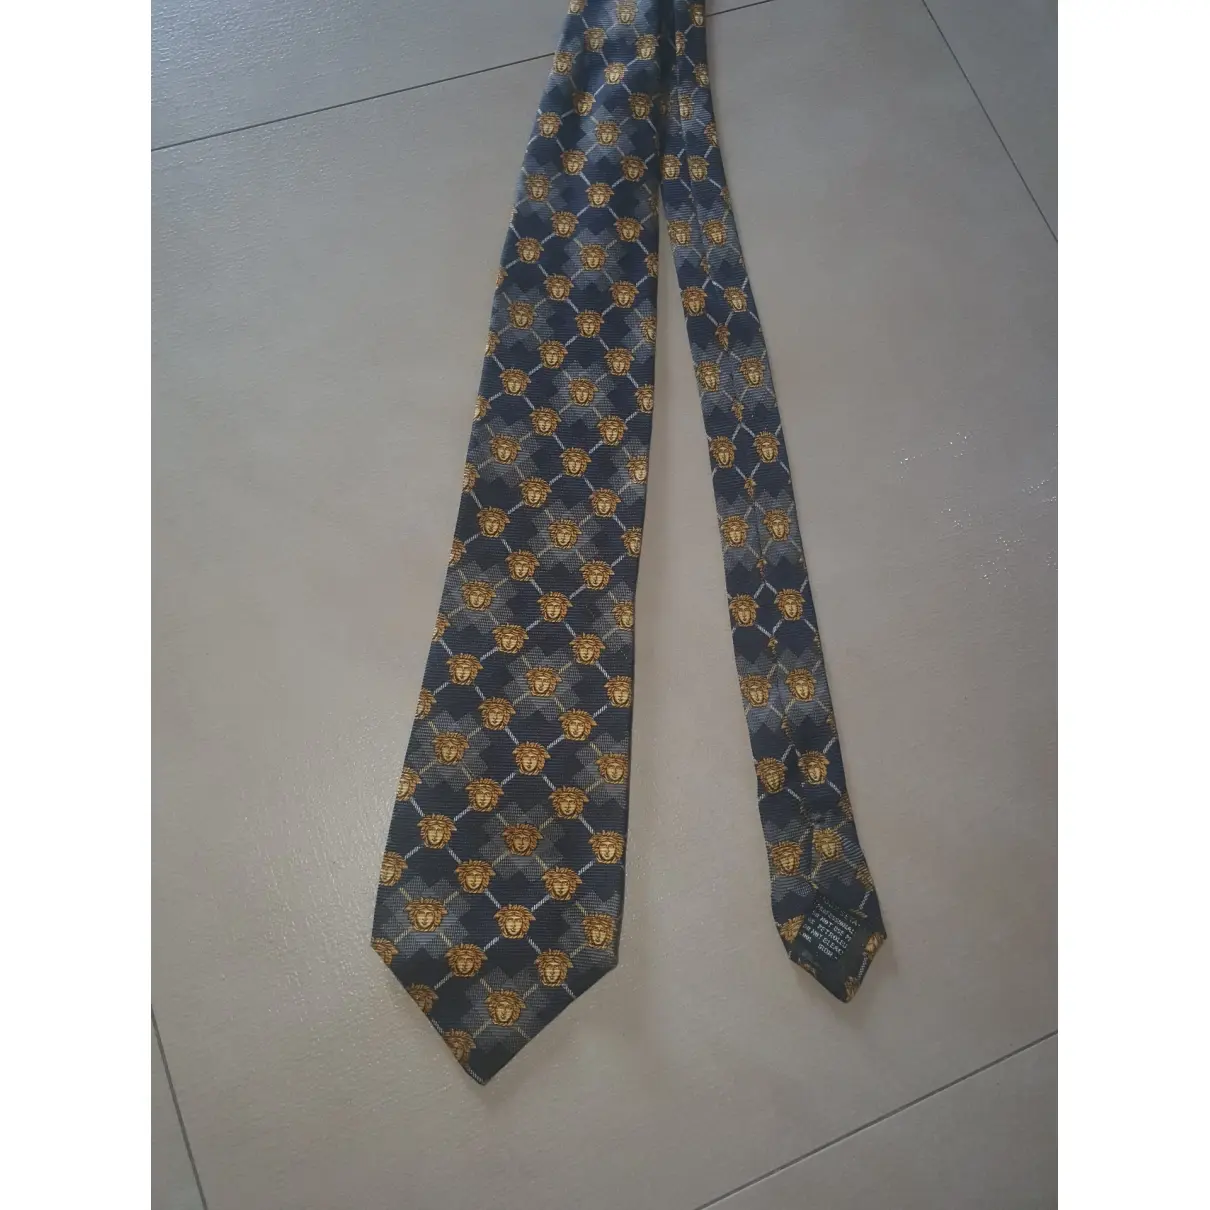 Gianni Versace Silk tie for sale - Vintage